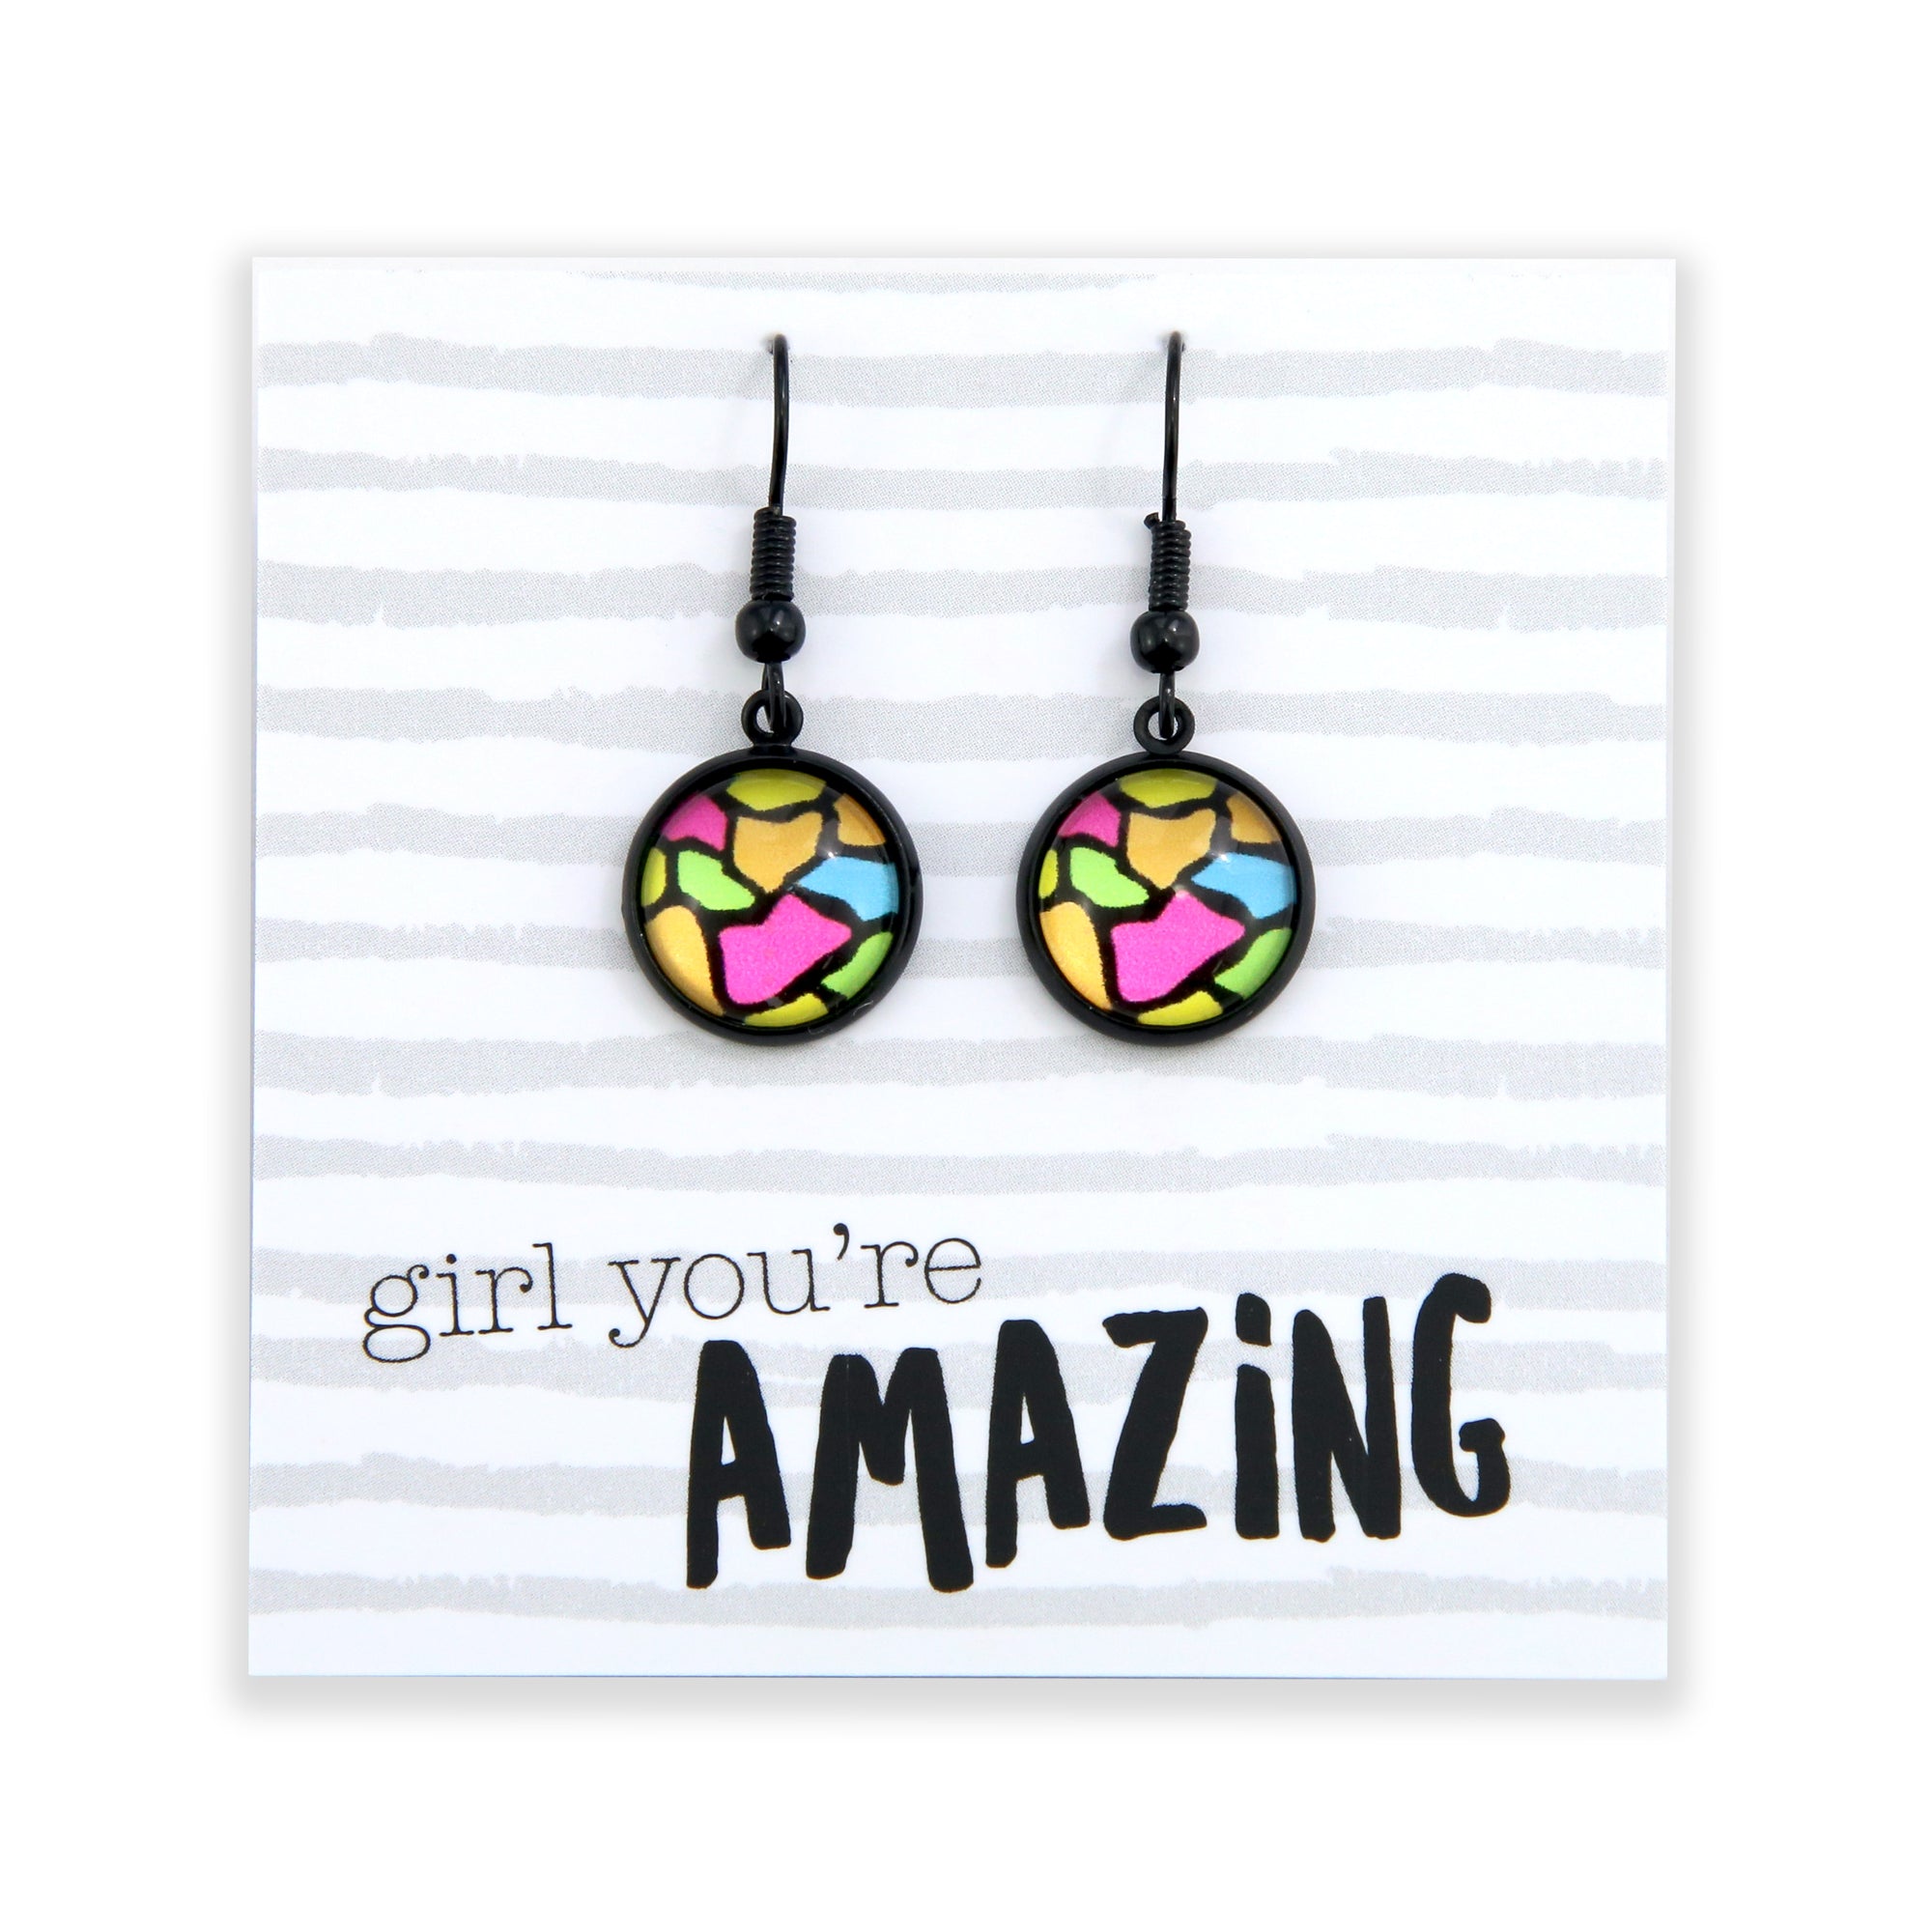 Girl You're Amazing - Black Dangle Earrings - Bright Giraffe (12051)